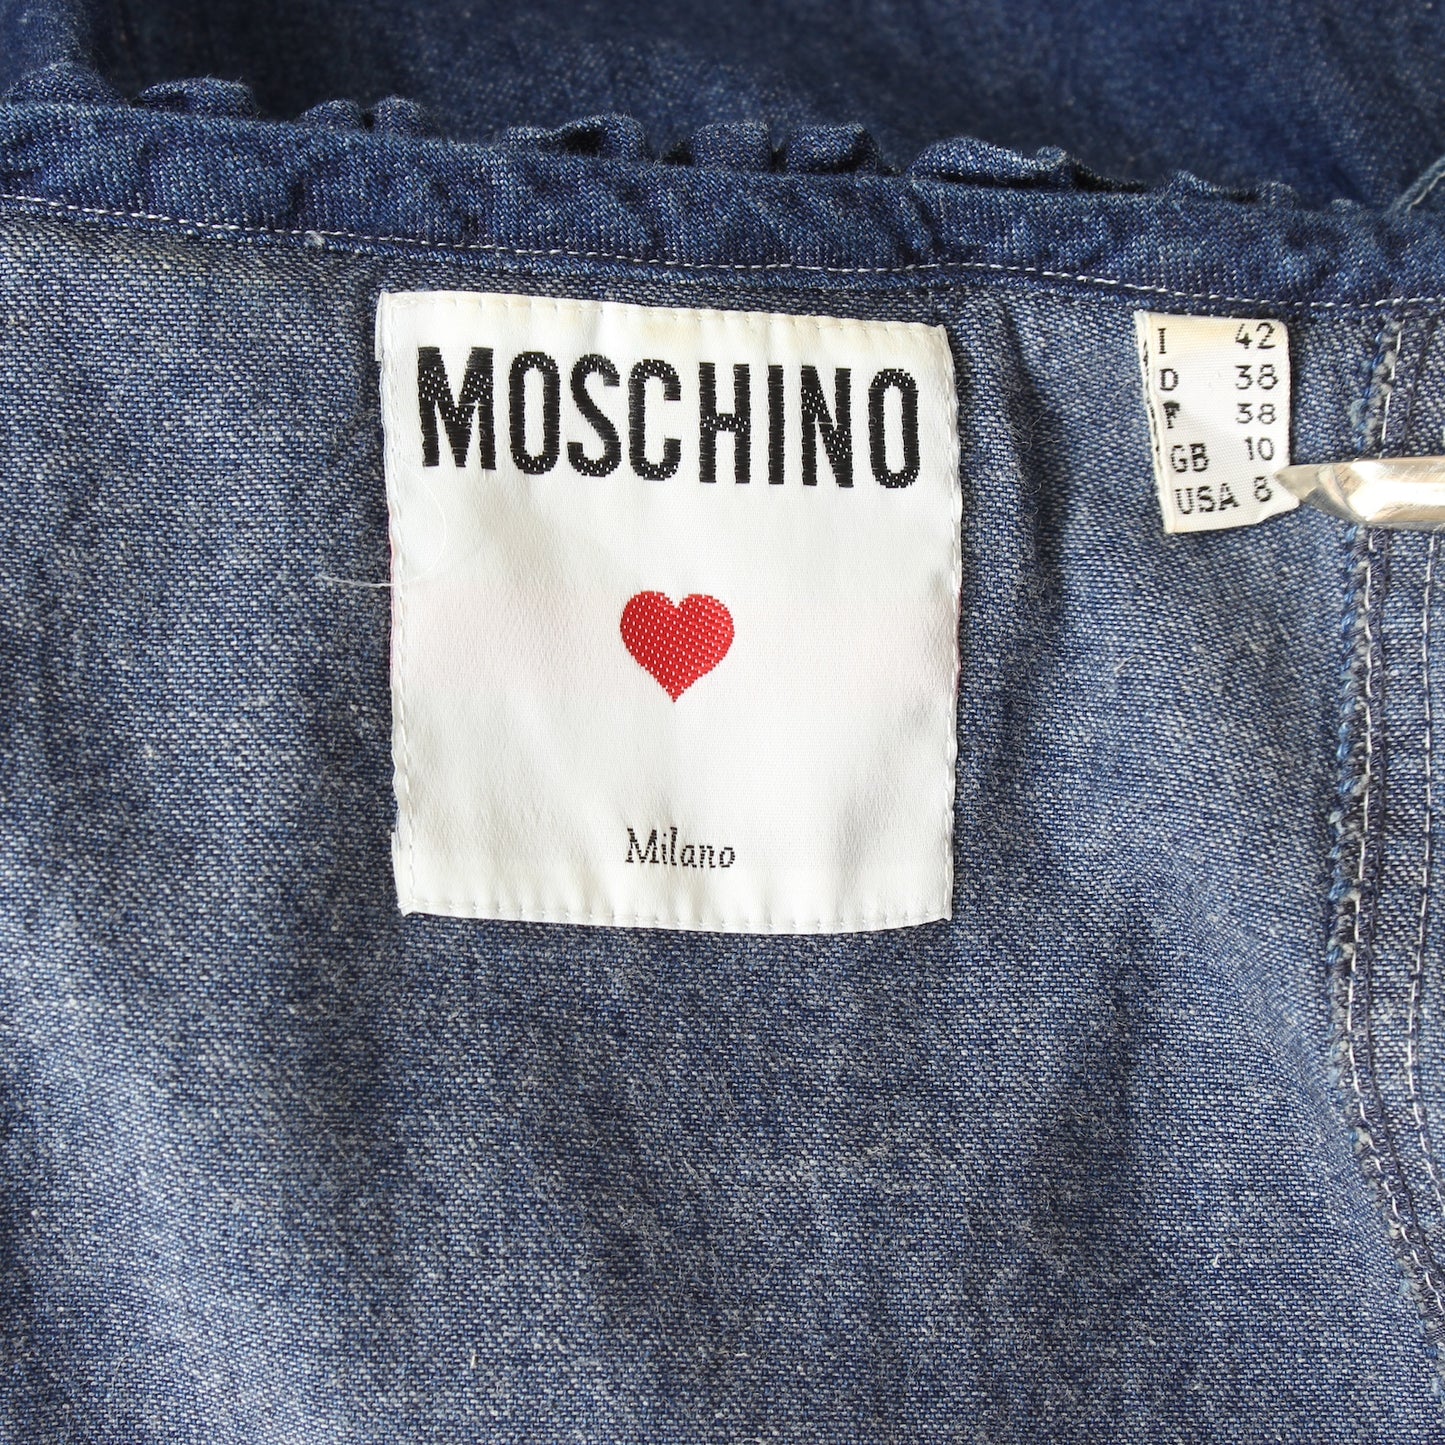 Moschino Blue Jeans Denim Rouches Dress Vintage 1980s